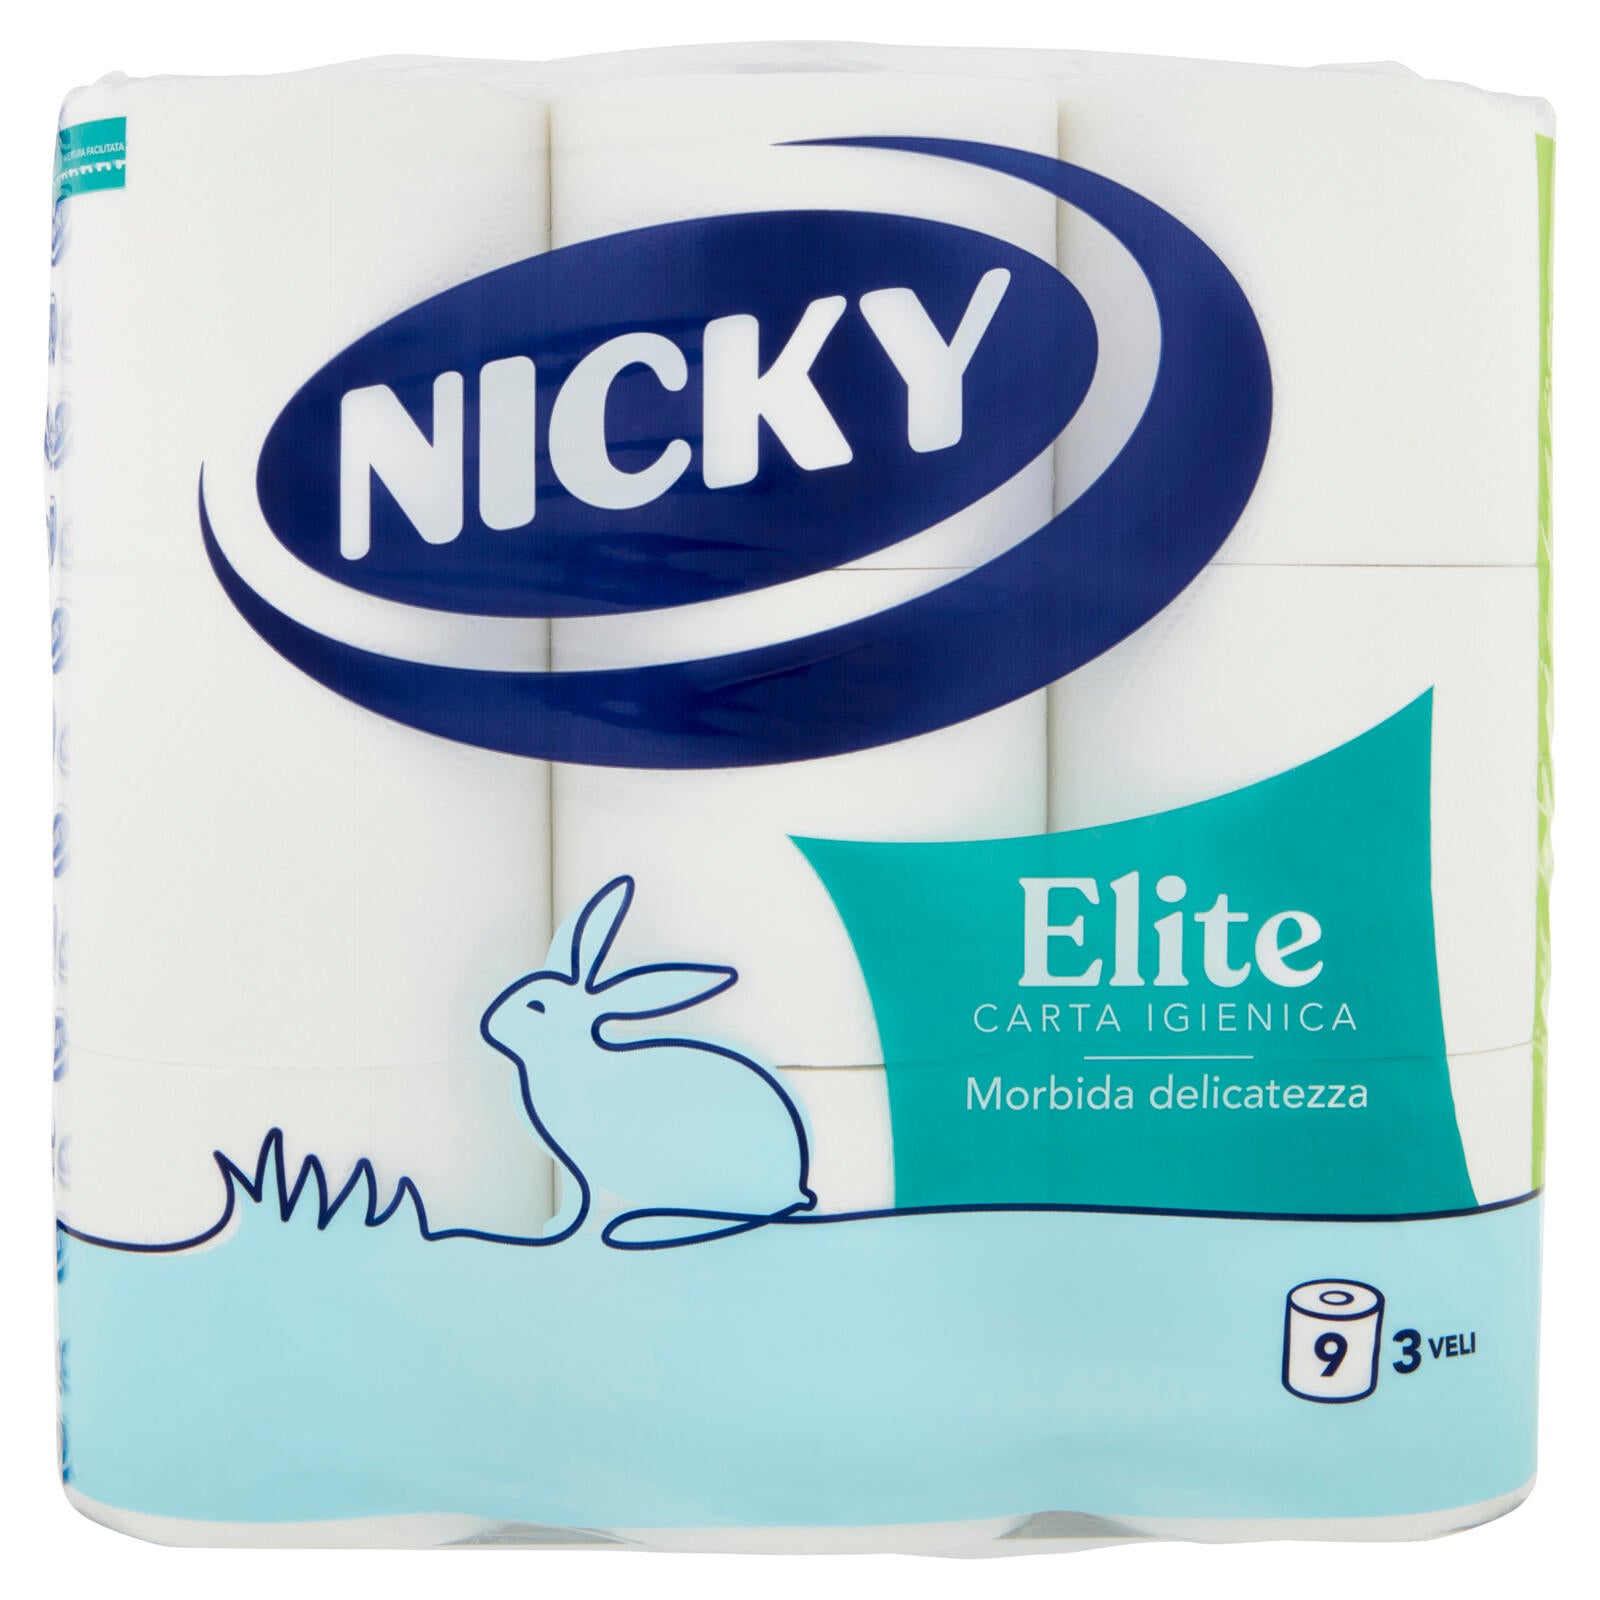 Nicky Elite Carta Igienica 9 pz